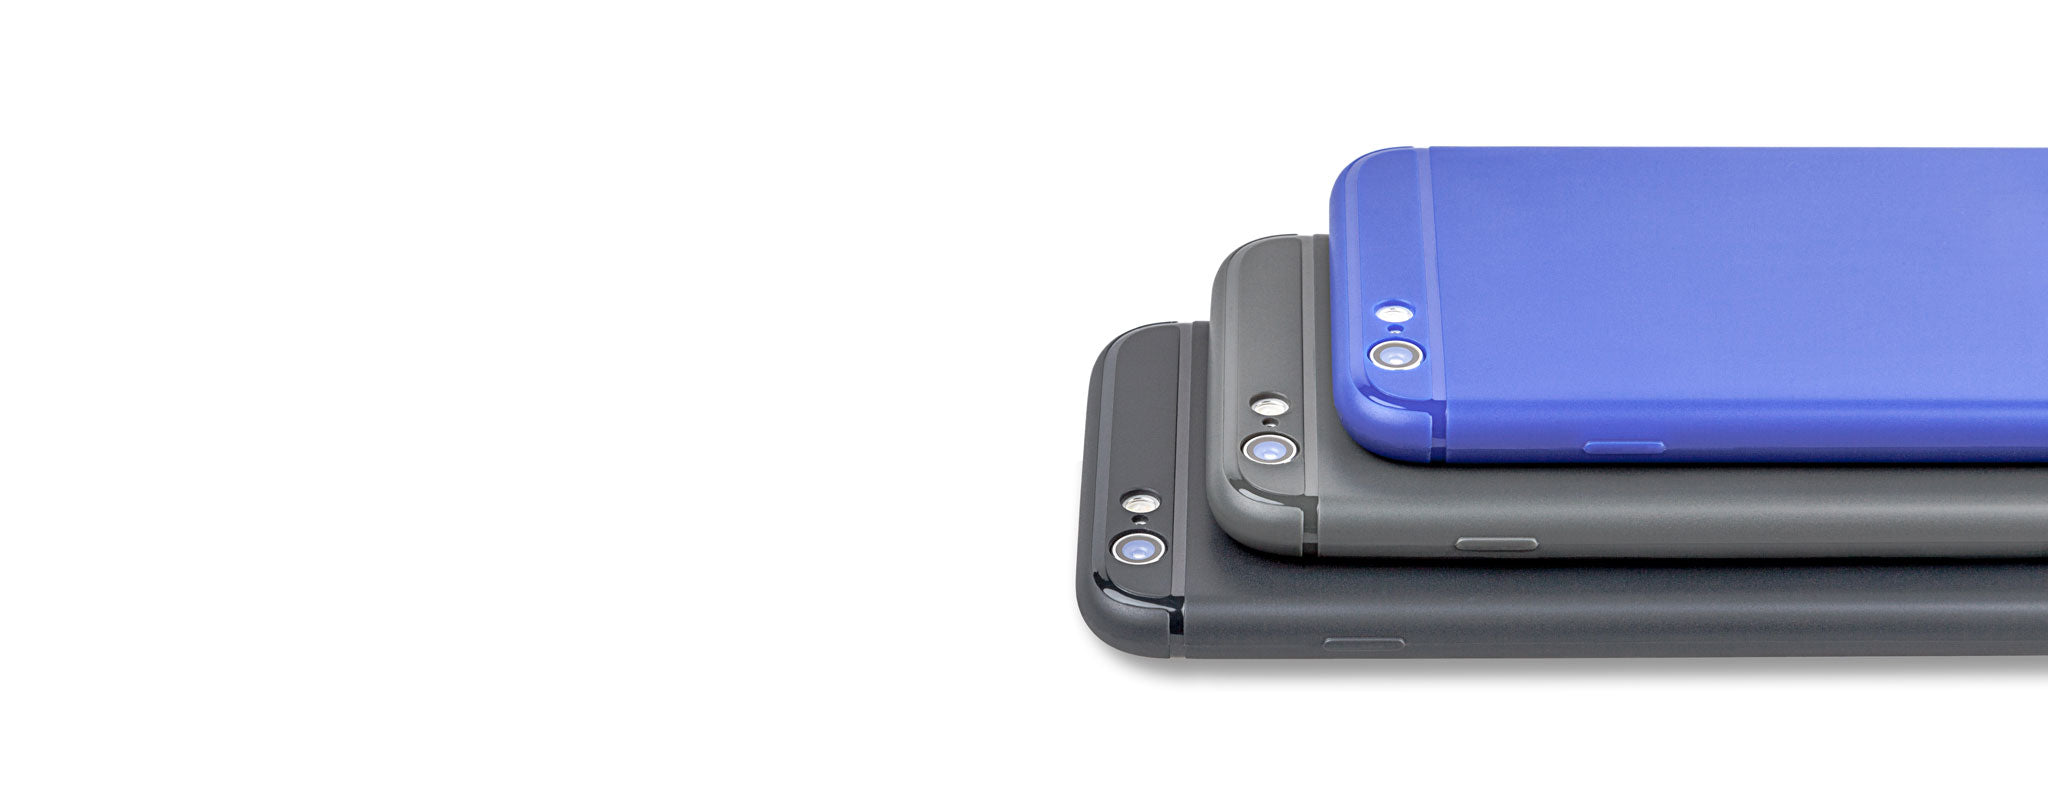 The Sheath | Super slim, shock-absorbing, minimalist iPhone case | threecamera